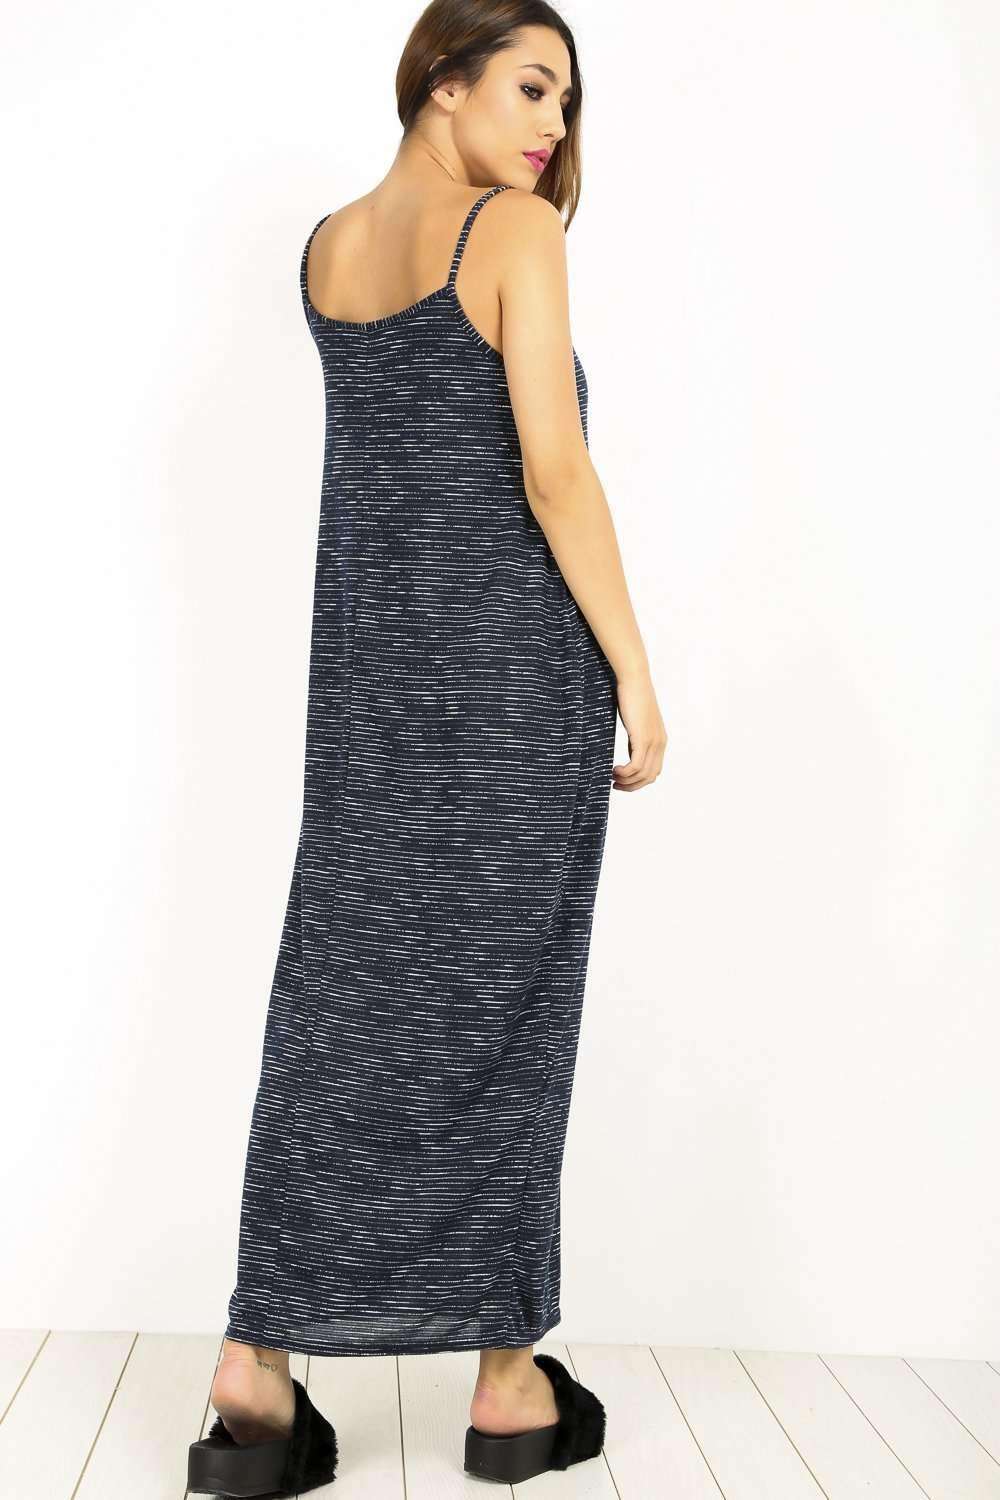 Amelia Navy Marl Knit Oversized Maxi Dress - bejealous-com